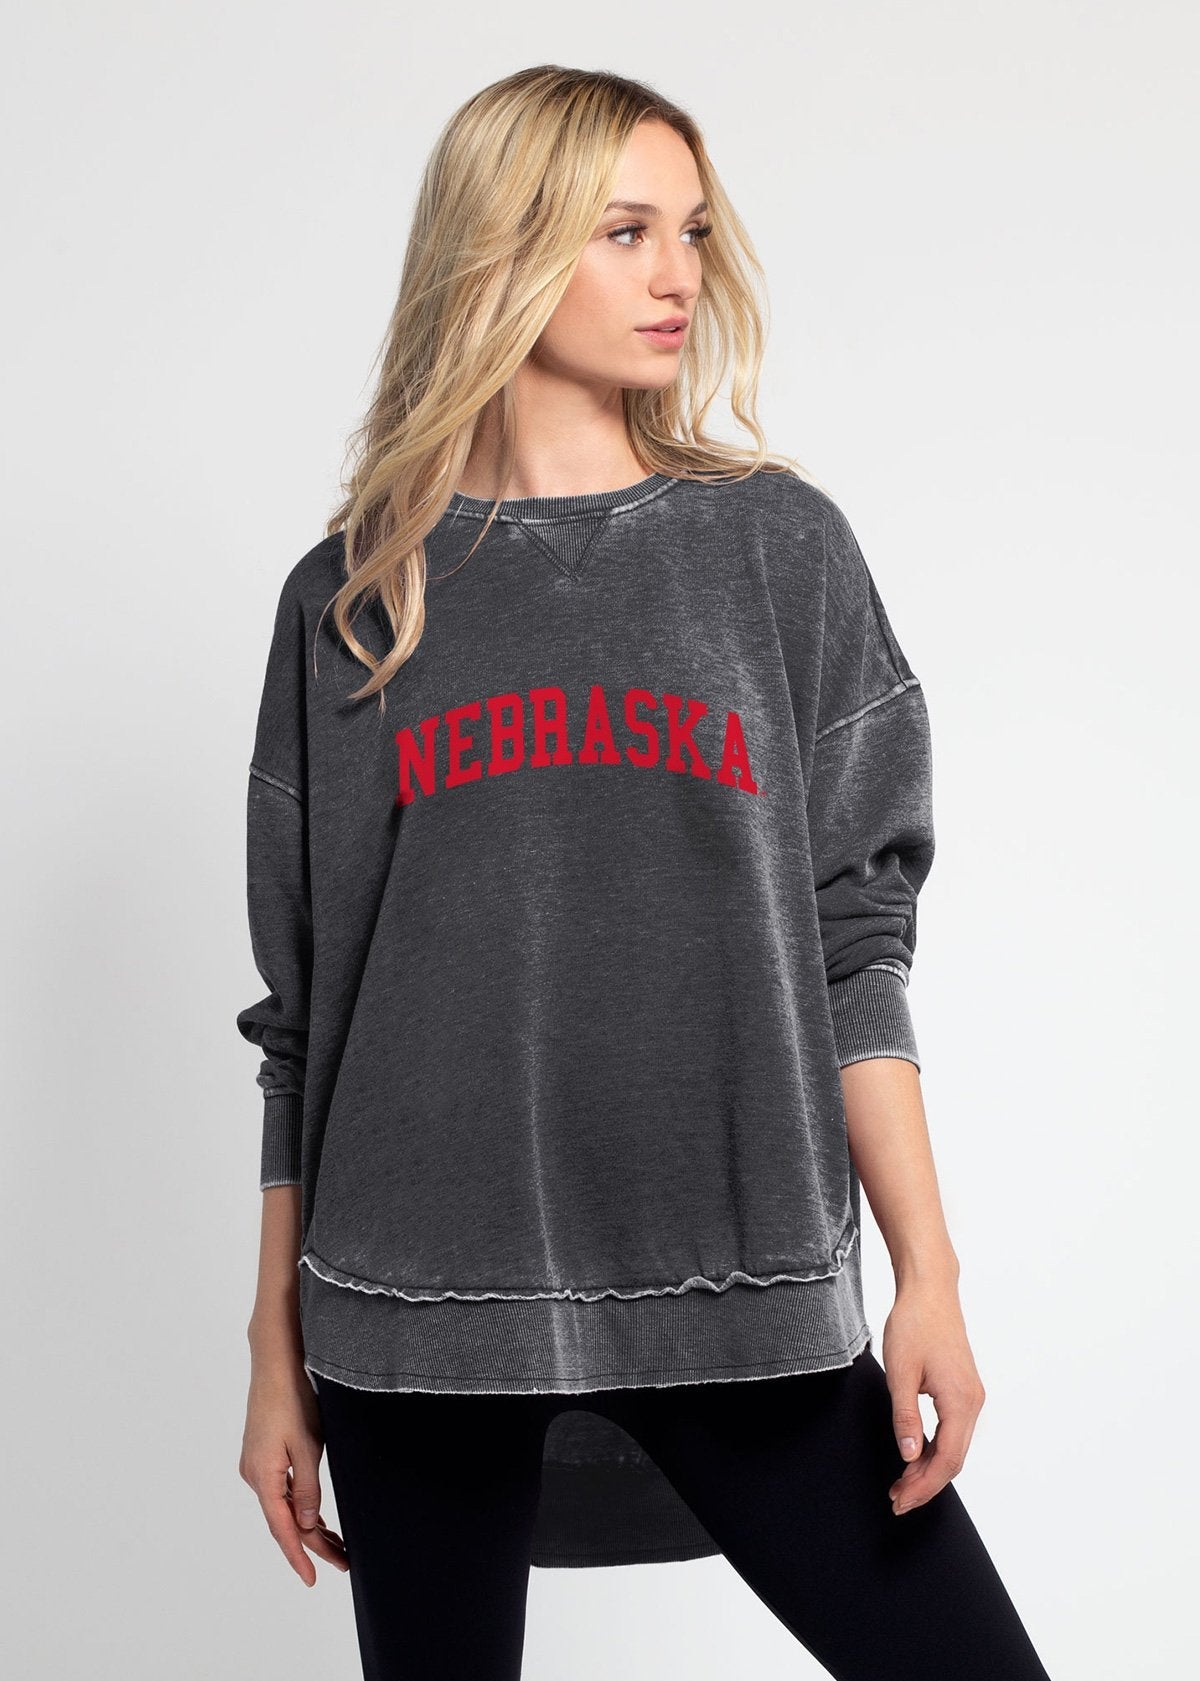 Nebraska Cornhuskers sweatshirt